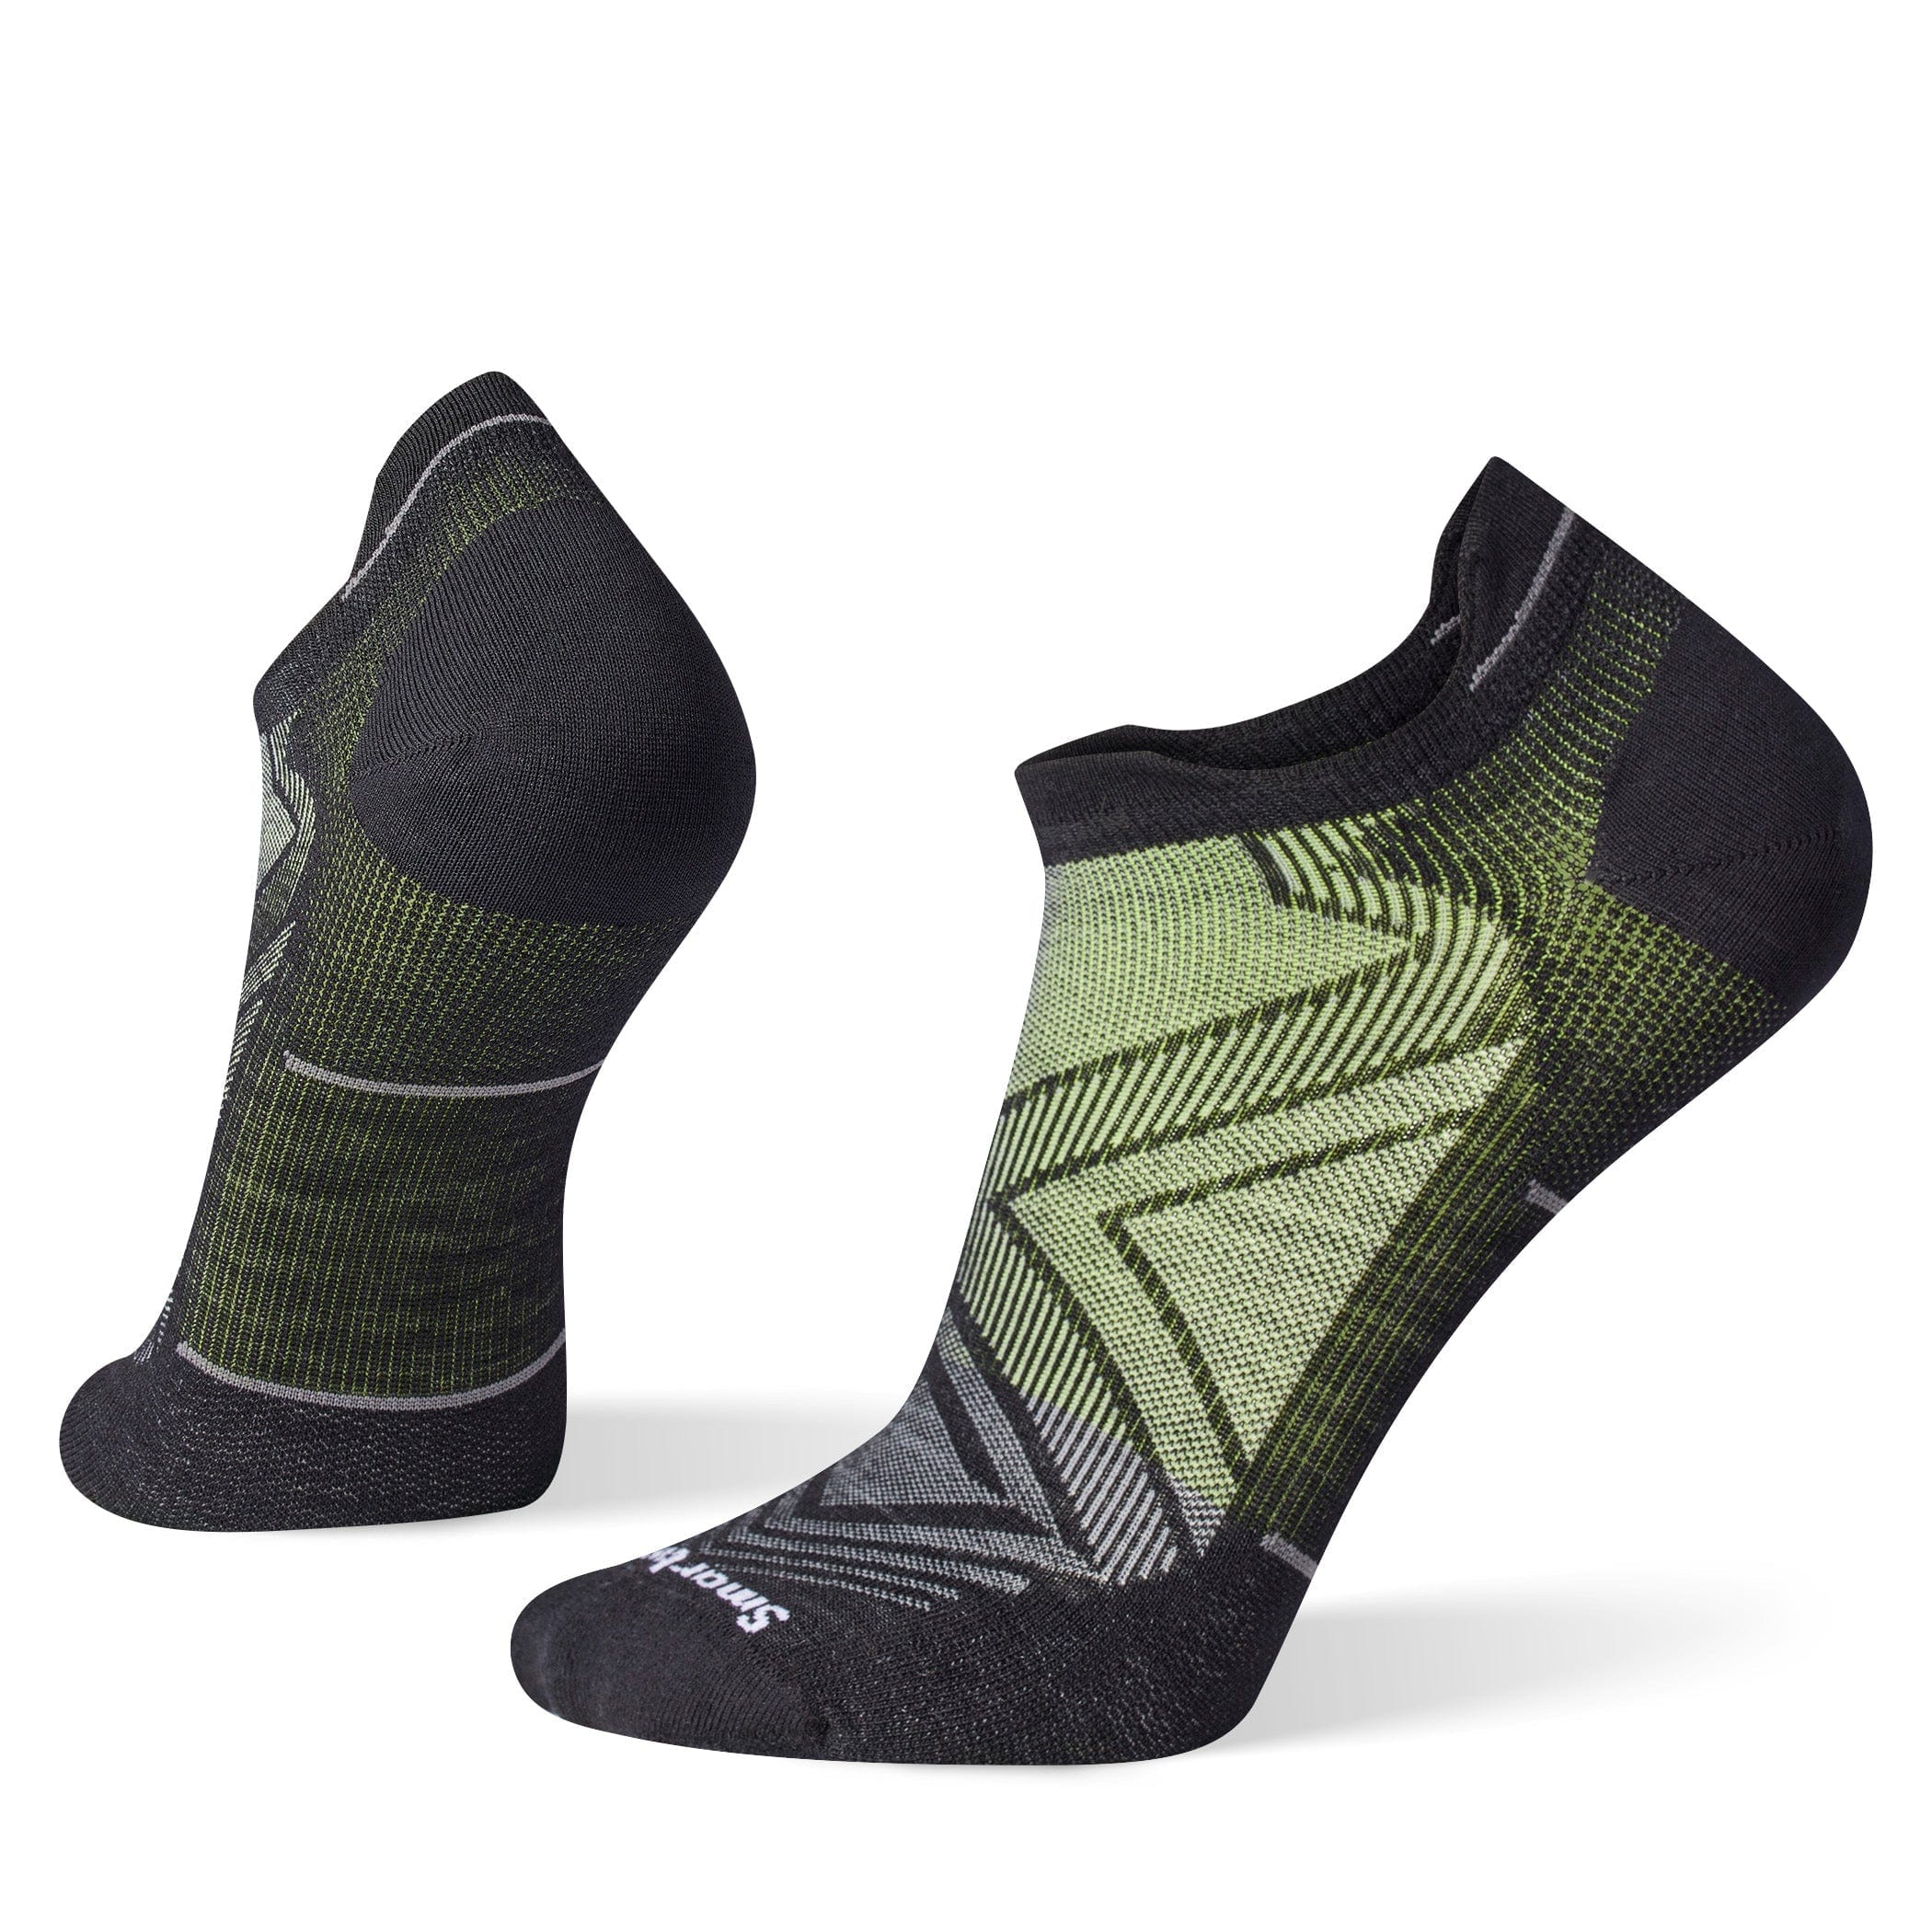 10327610001 - Smartwool Men's Run Zero Cushion Low Ankle Socks, Black - SW001651001-1-p